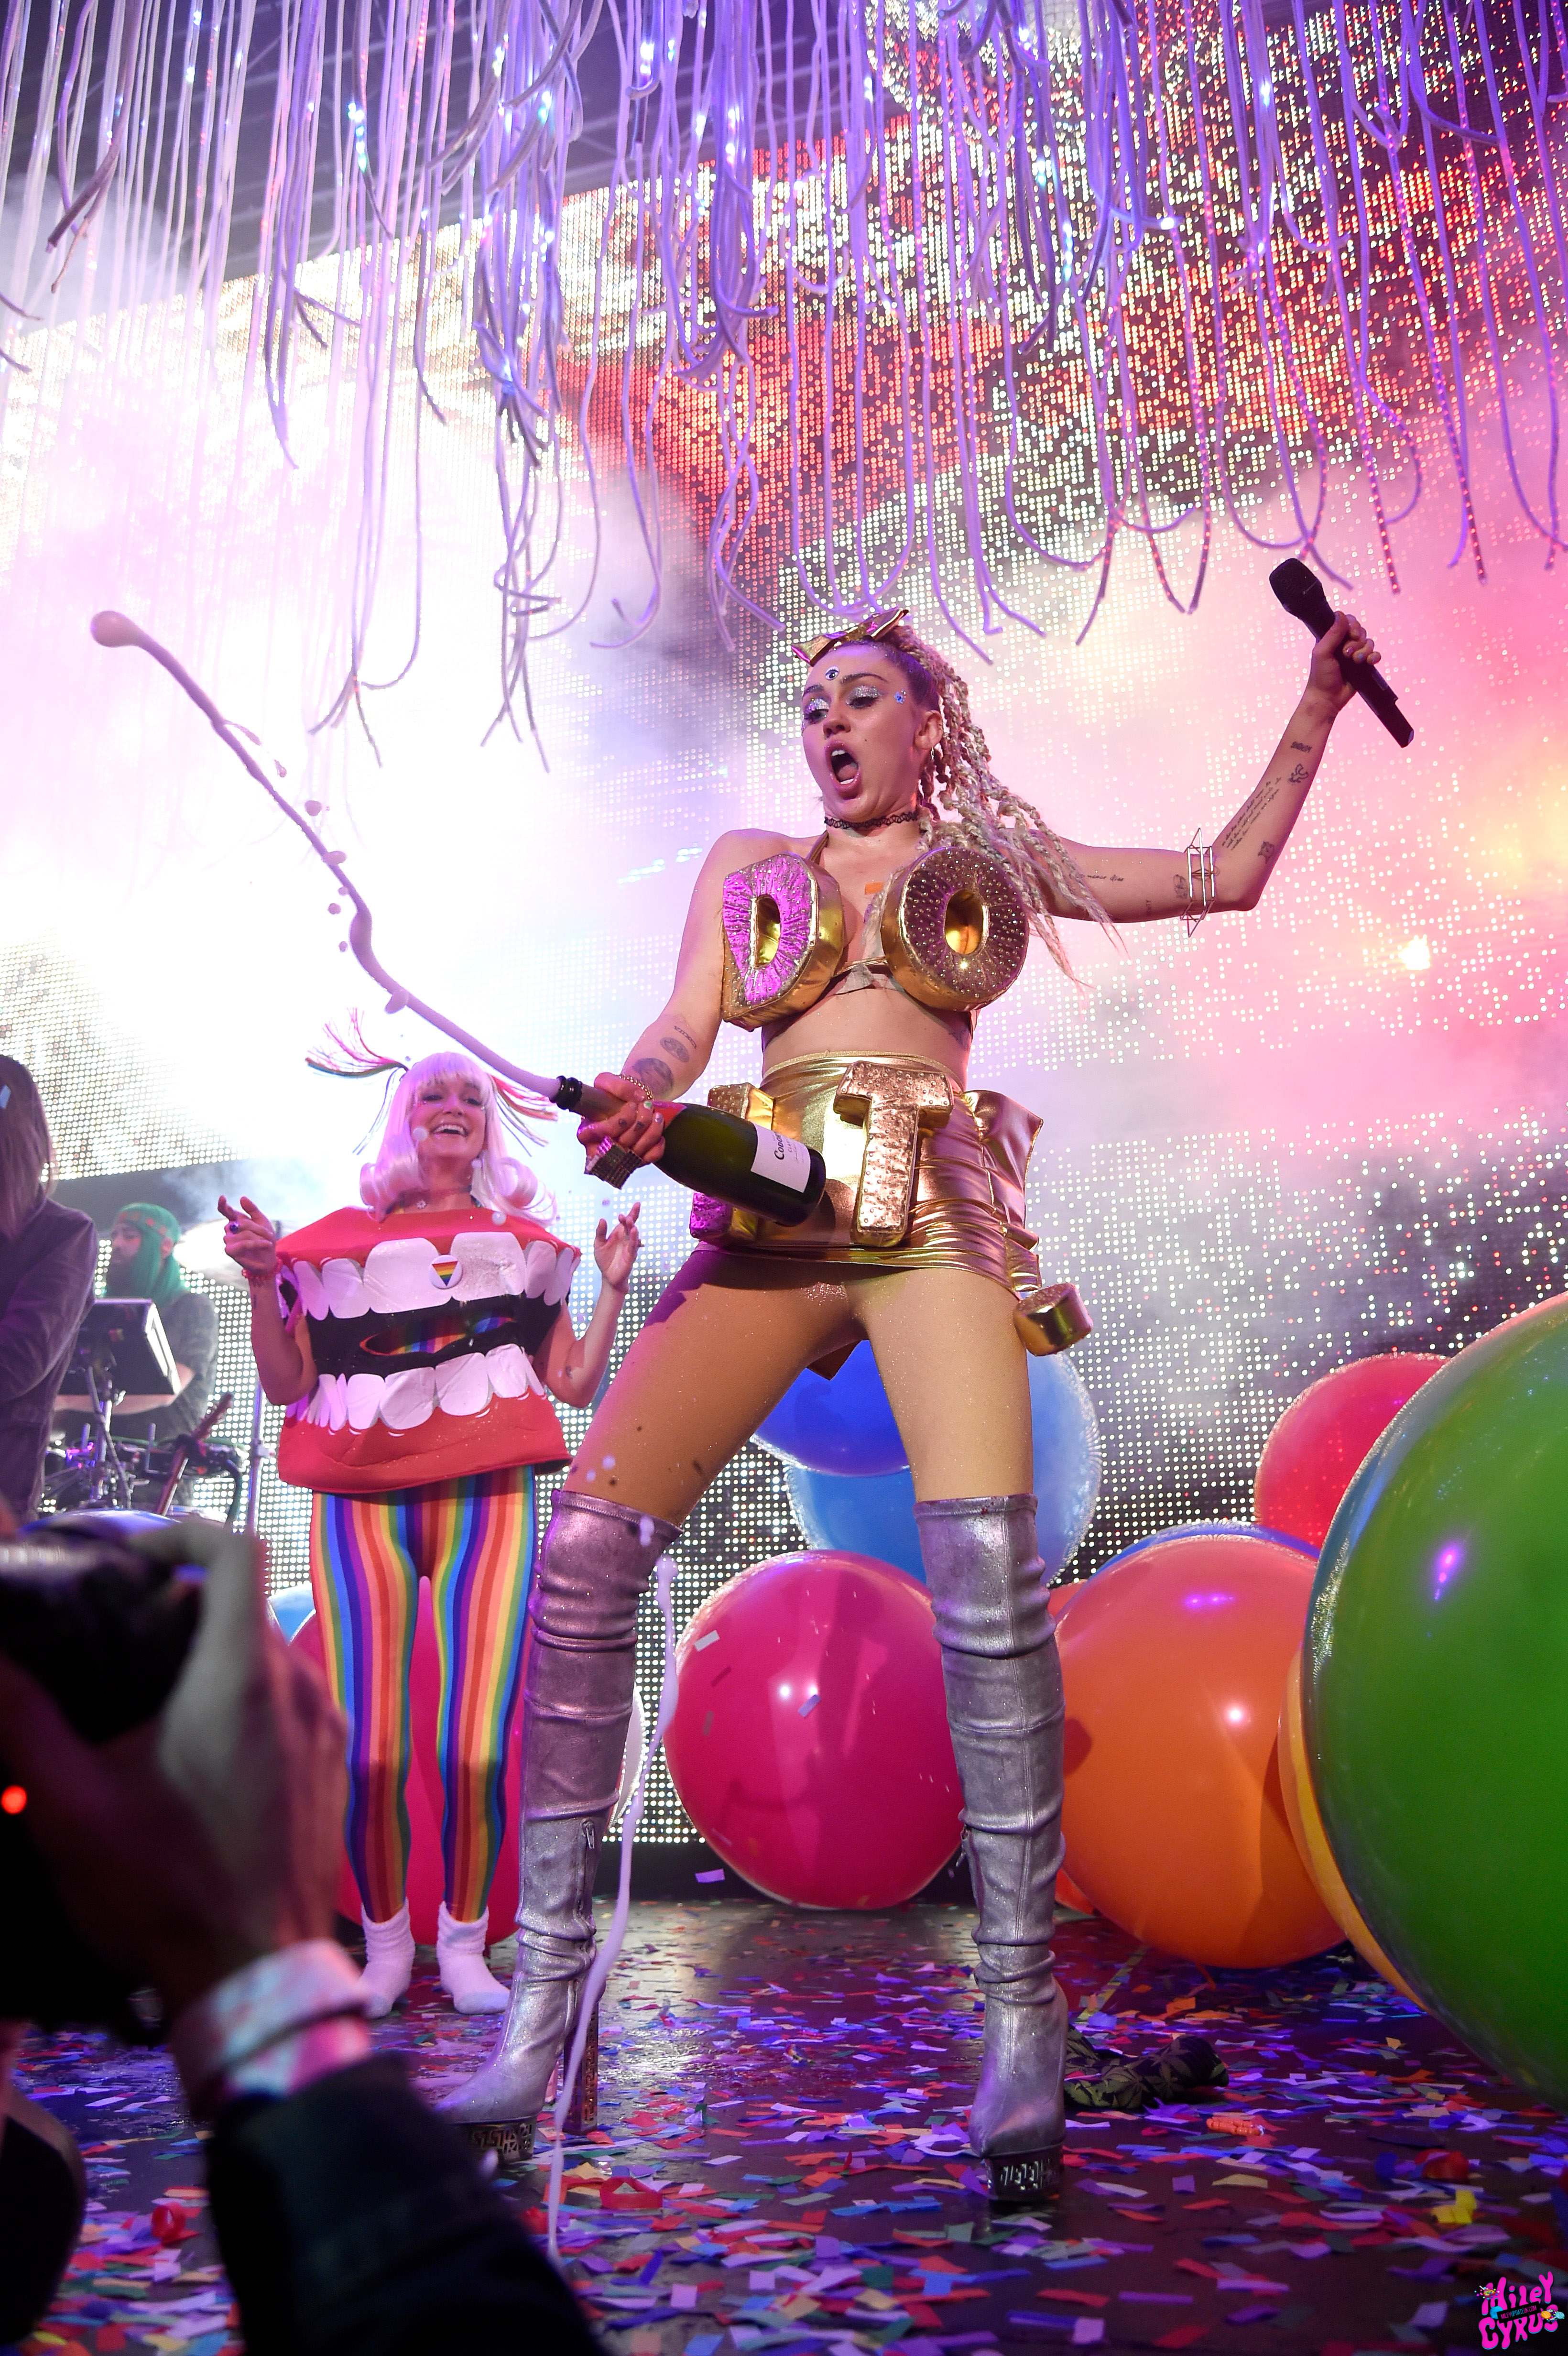 Miley Cyrus live peroformance pics